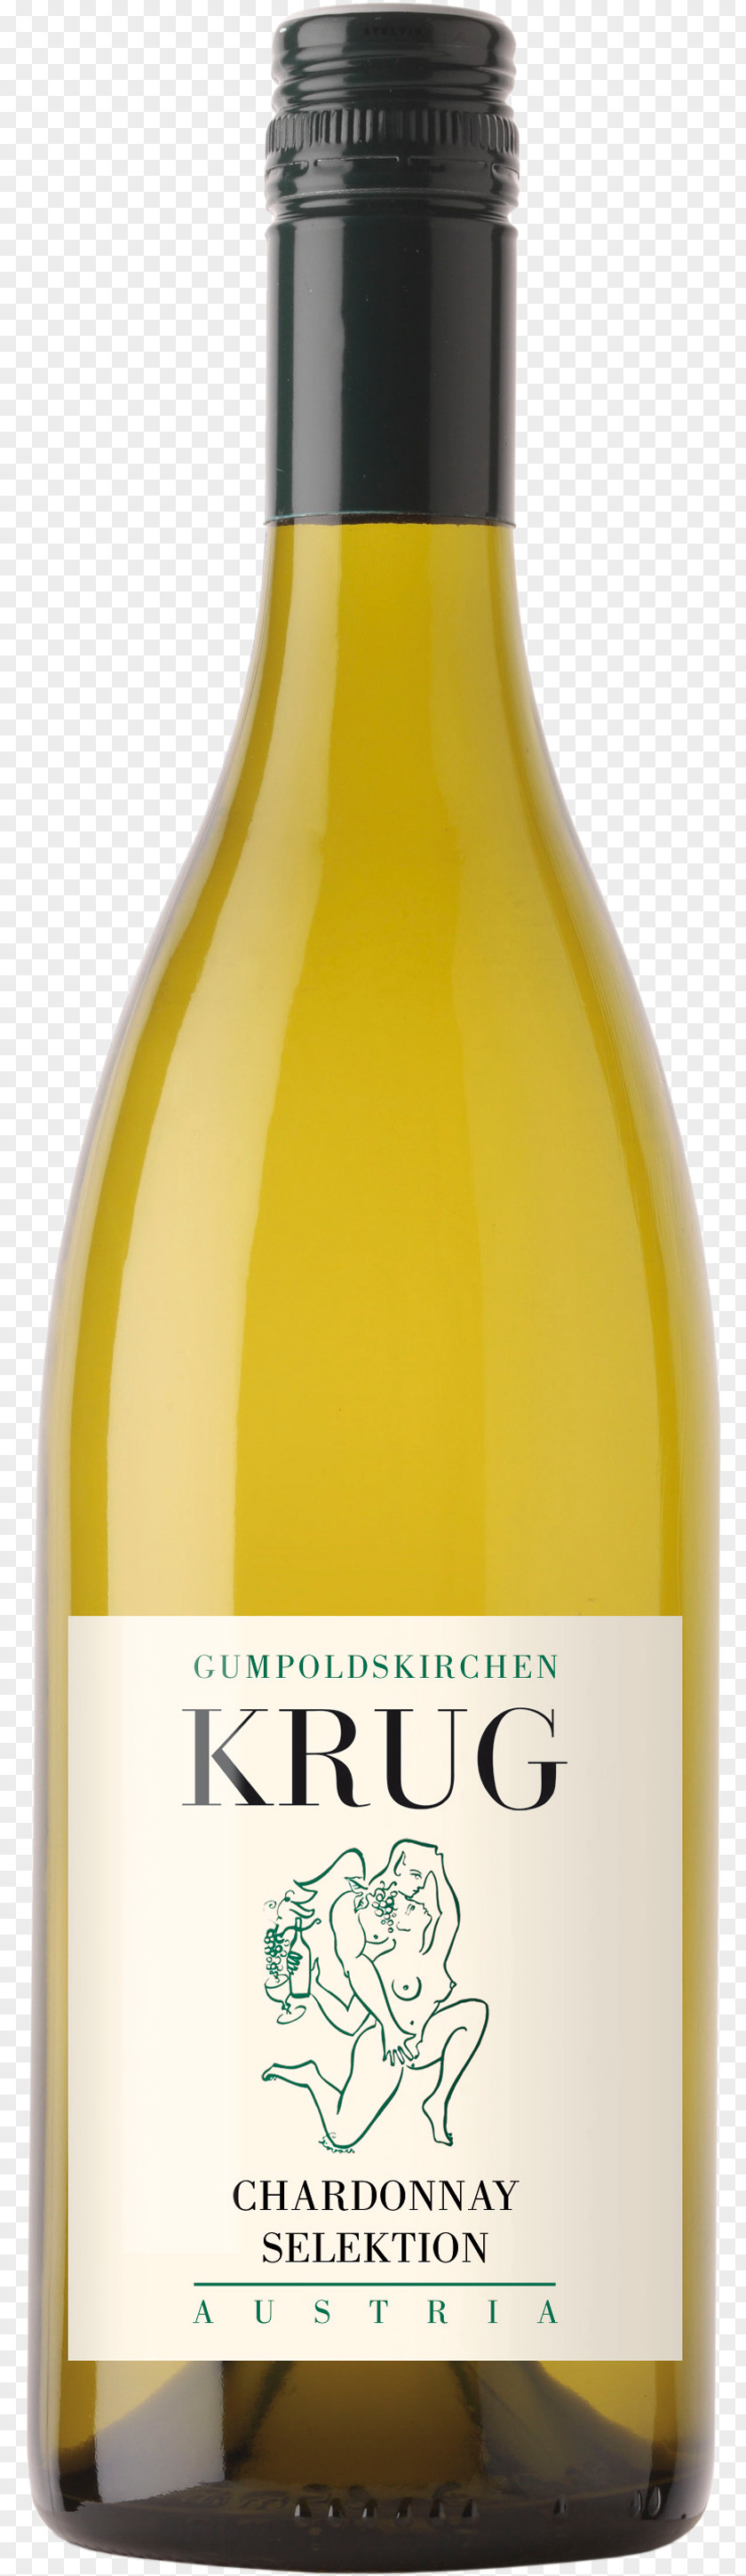 Wine Chardonnay Buena Vista Winery Chablis Region White PNG